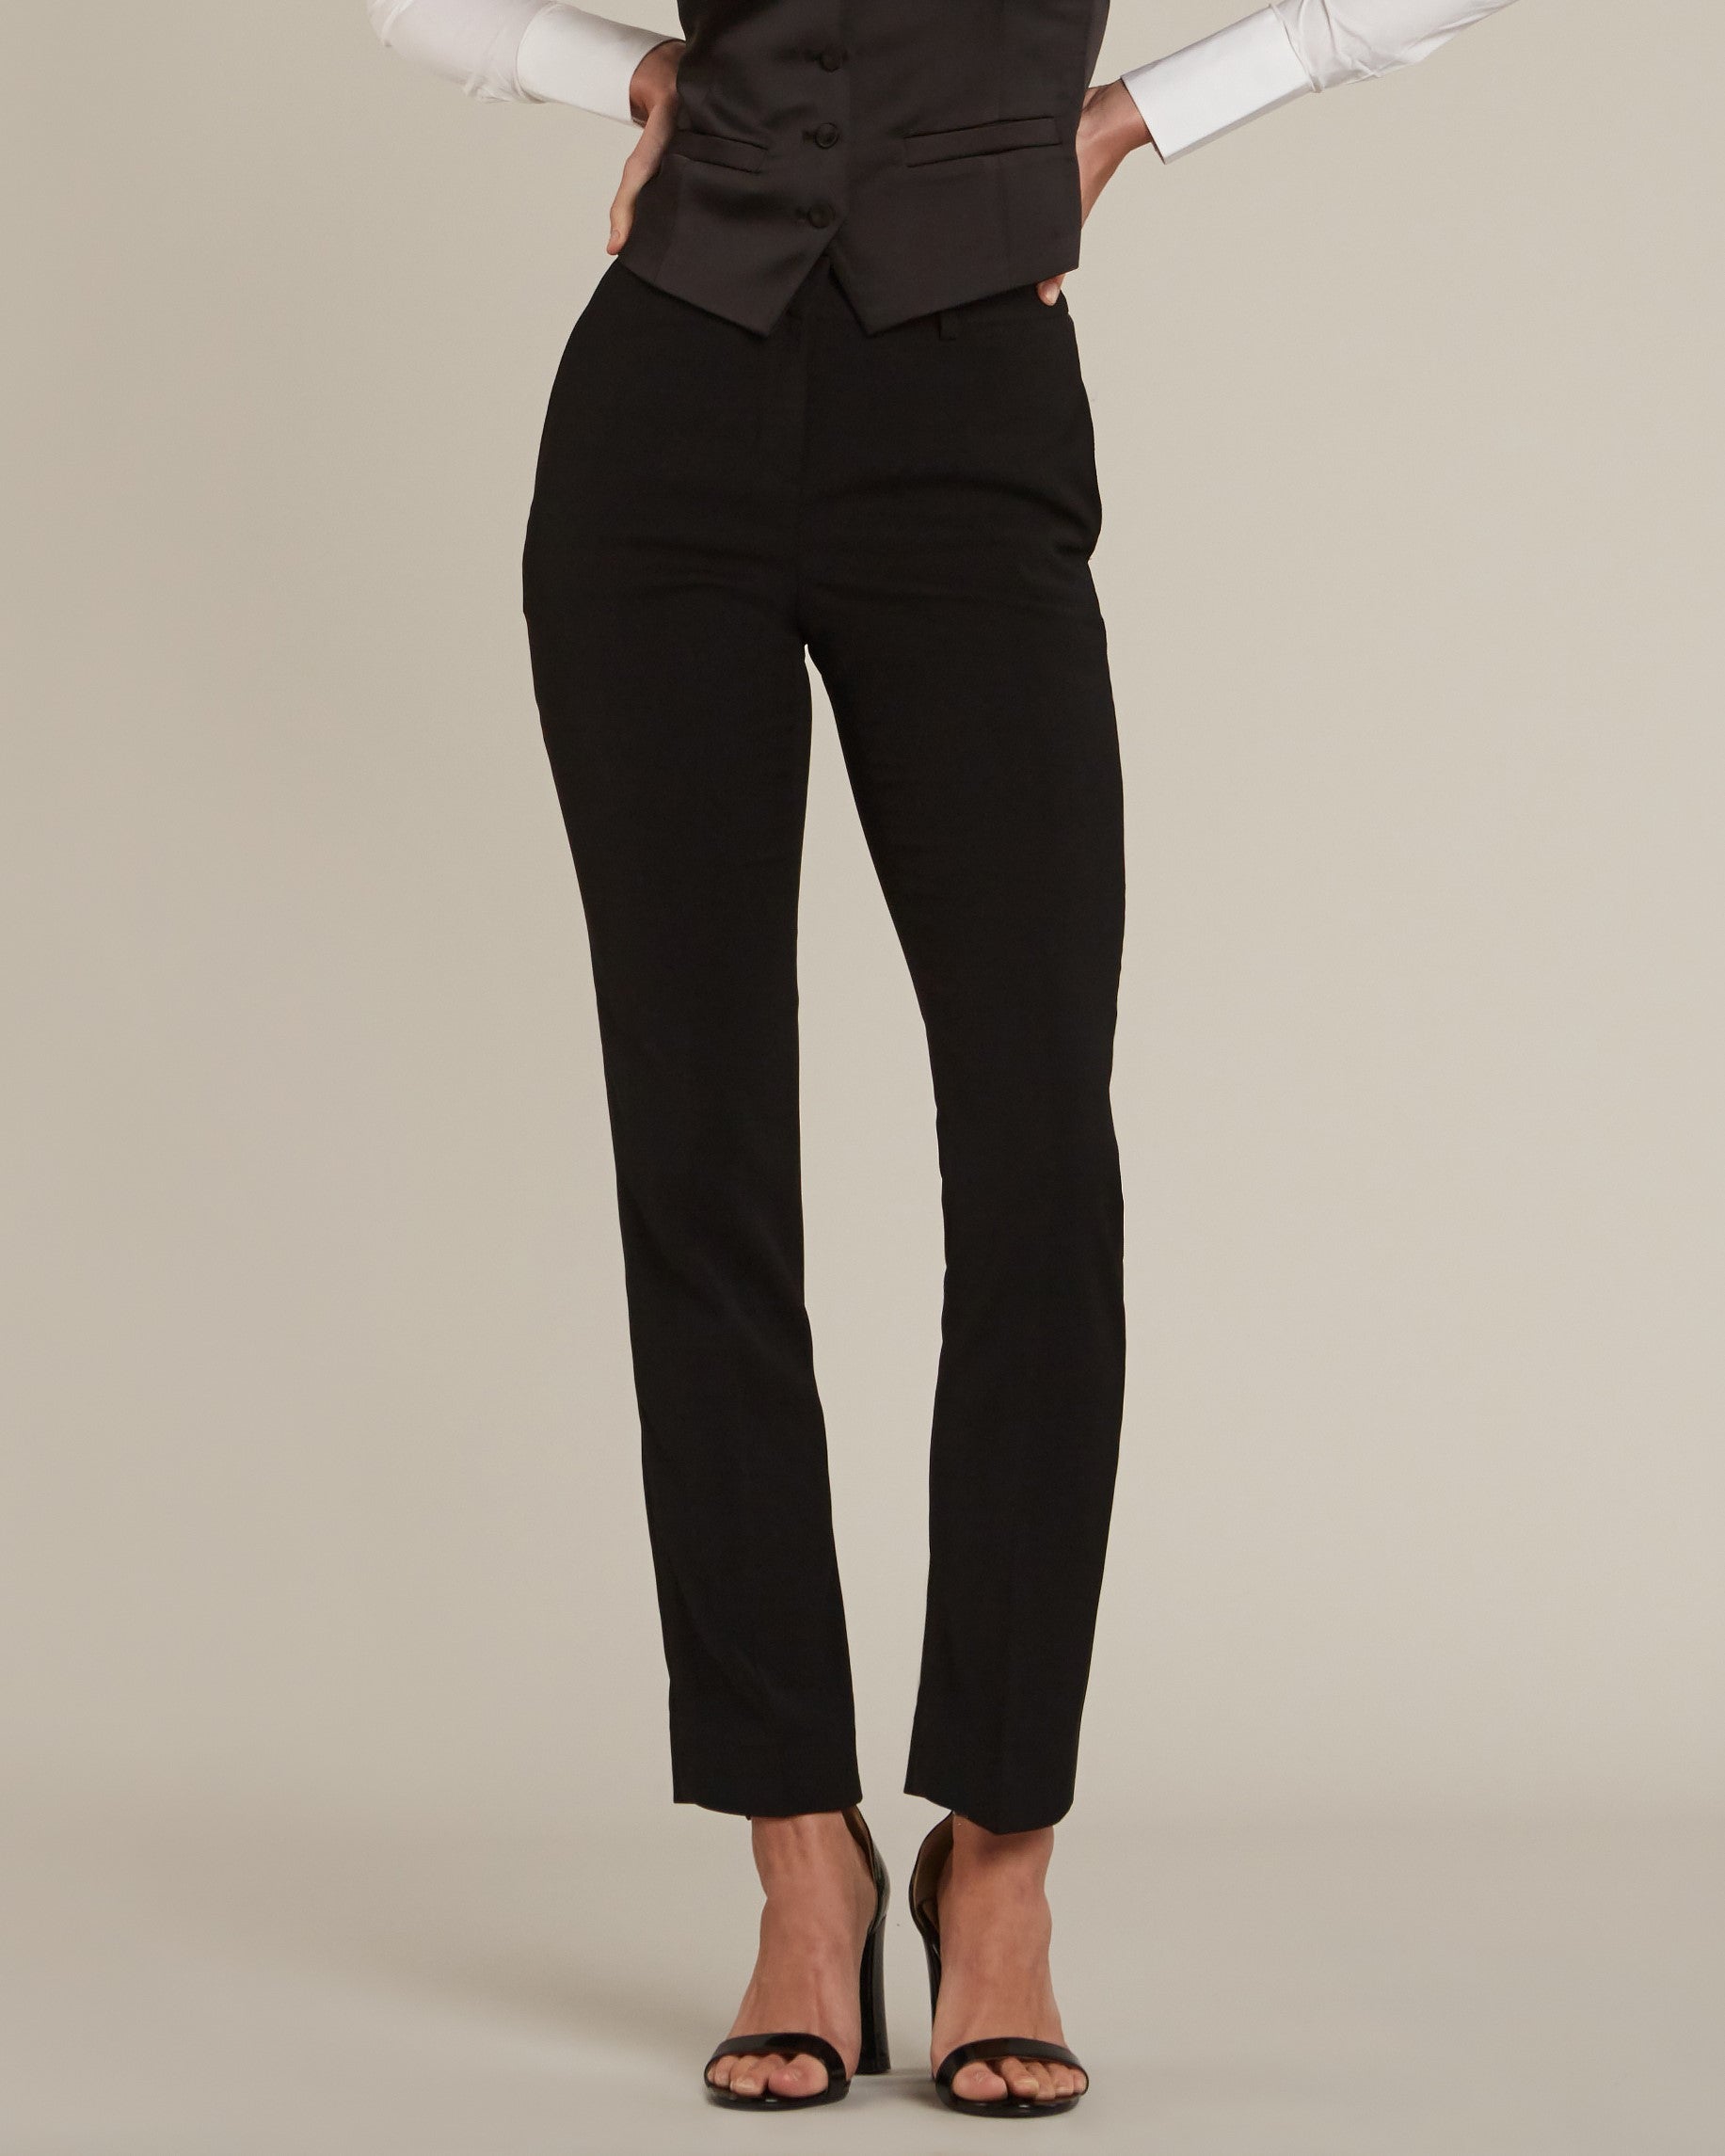 Black Slim Fit Tuxedo Pants w/ Satin Back Pocket